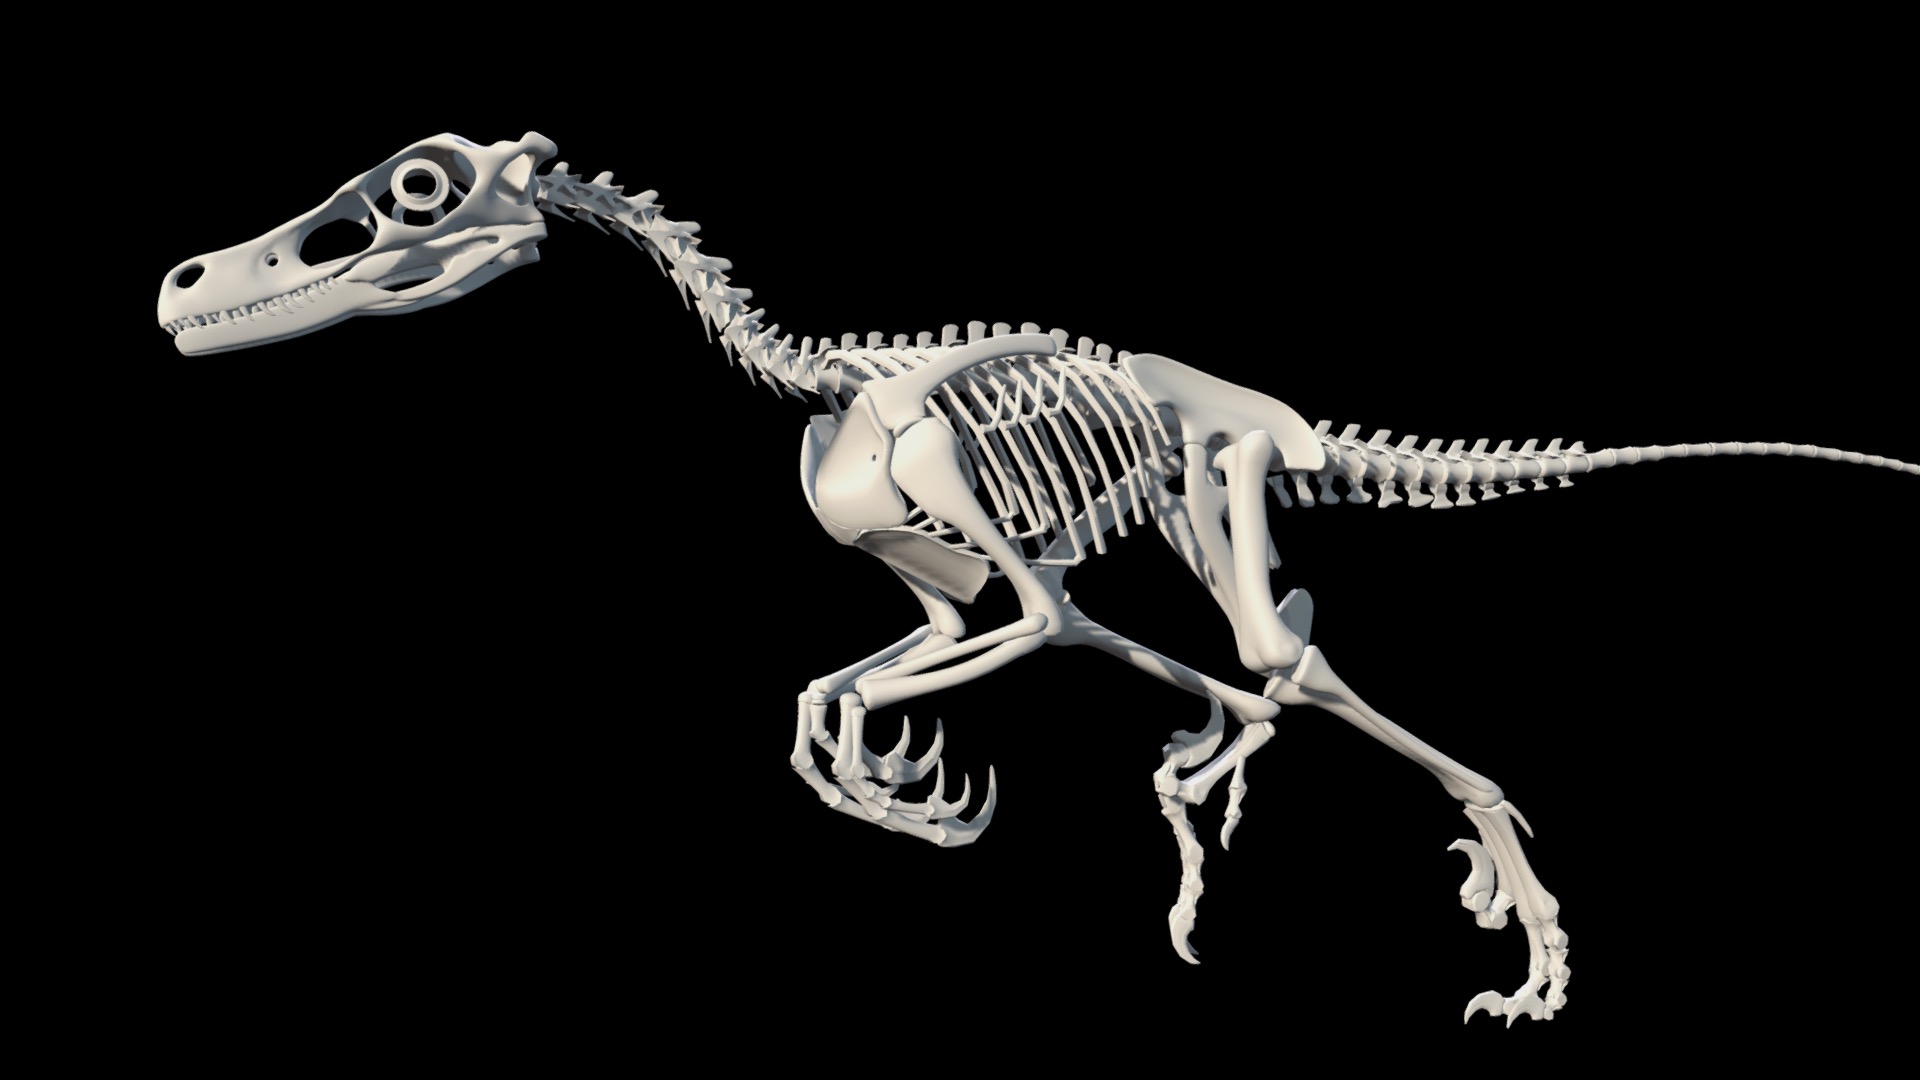 Velociraptor Skeleton 3d Model By Biozone 7d9c6ef Sketchfab